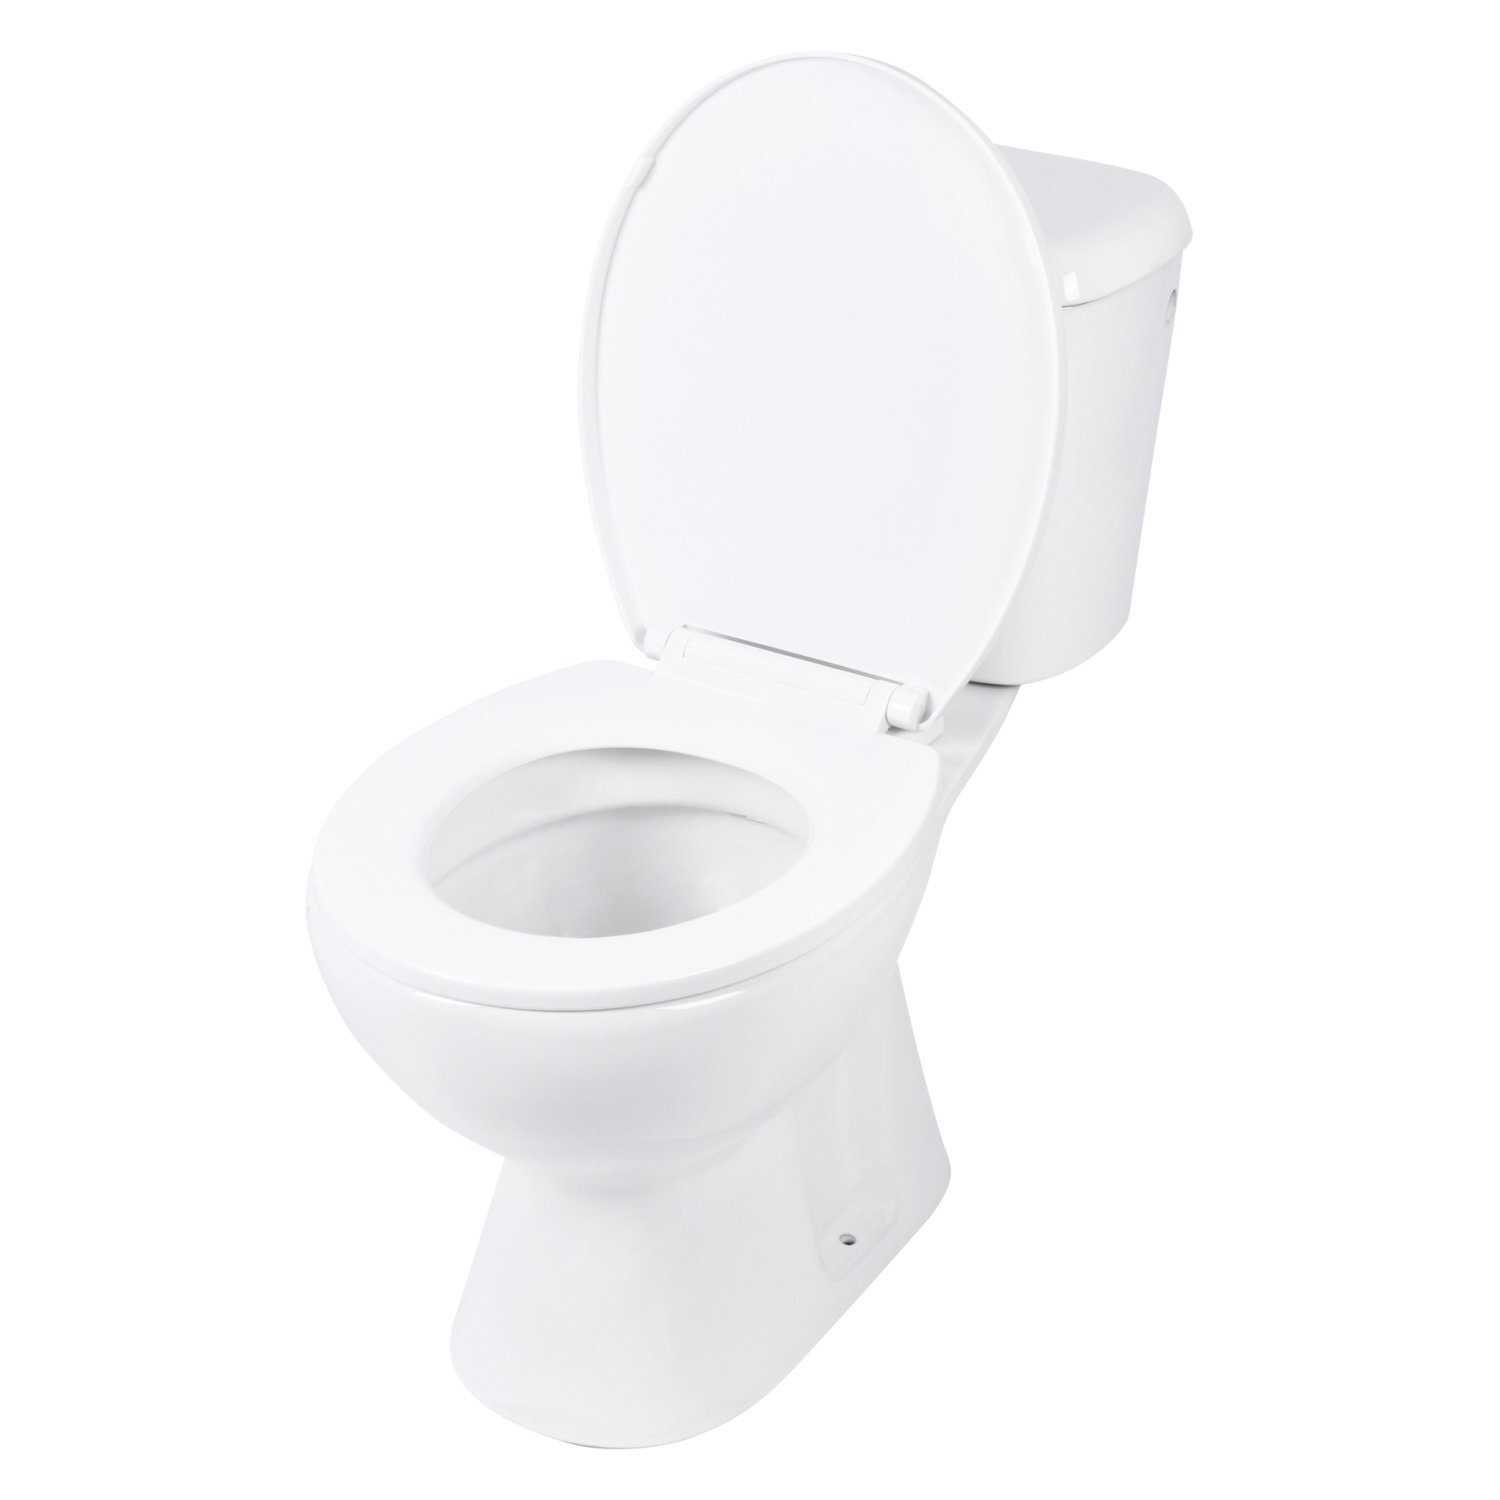 Differnz Toiletpot differnz staand met pk uitgang inclusief toiletbril wit